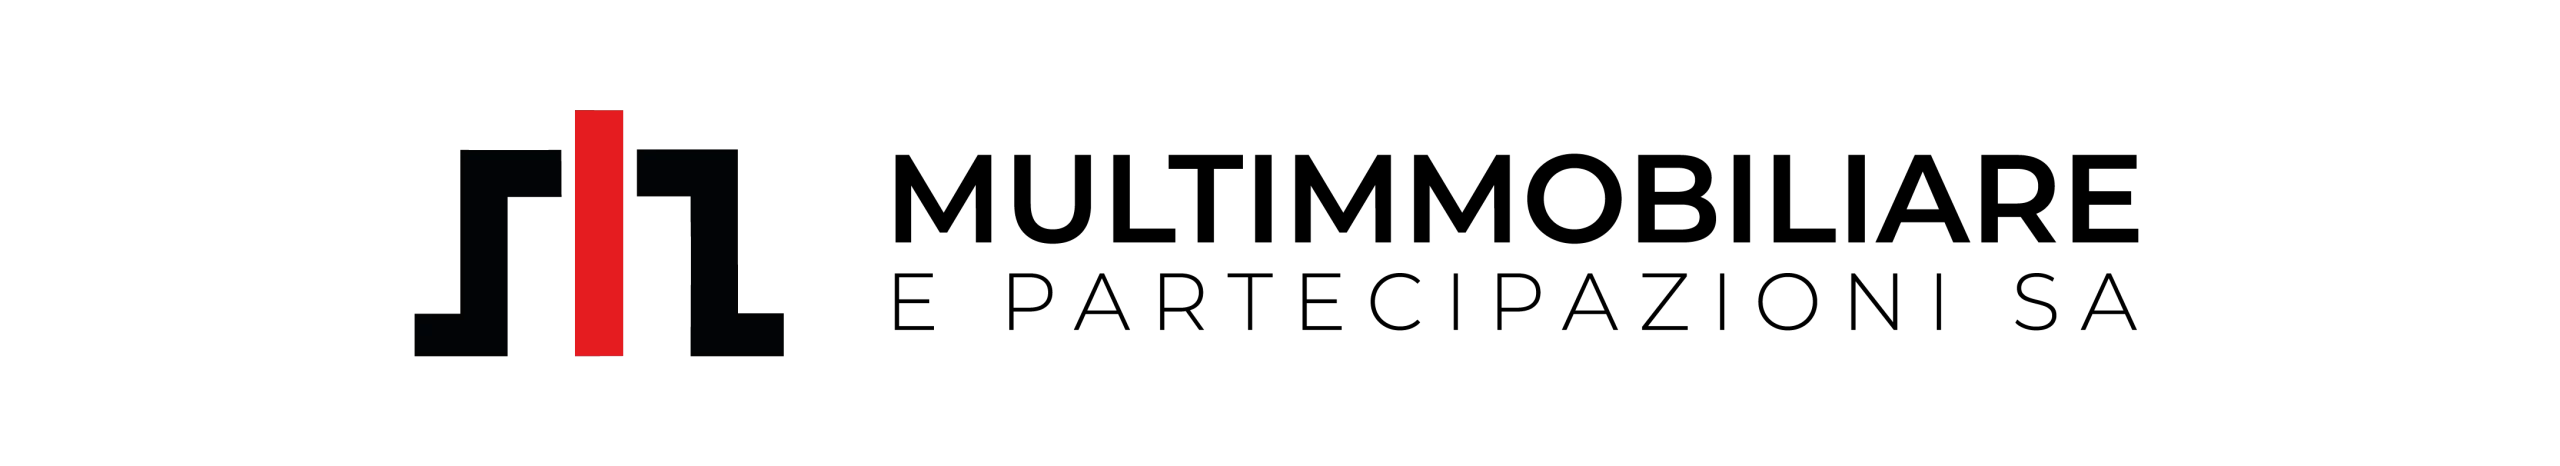 logo aziendale